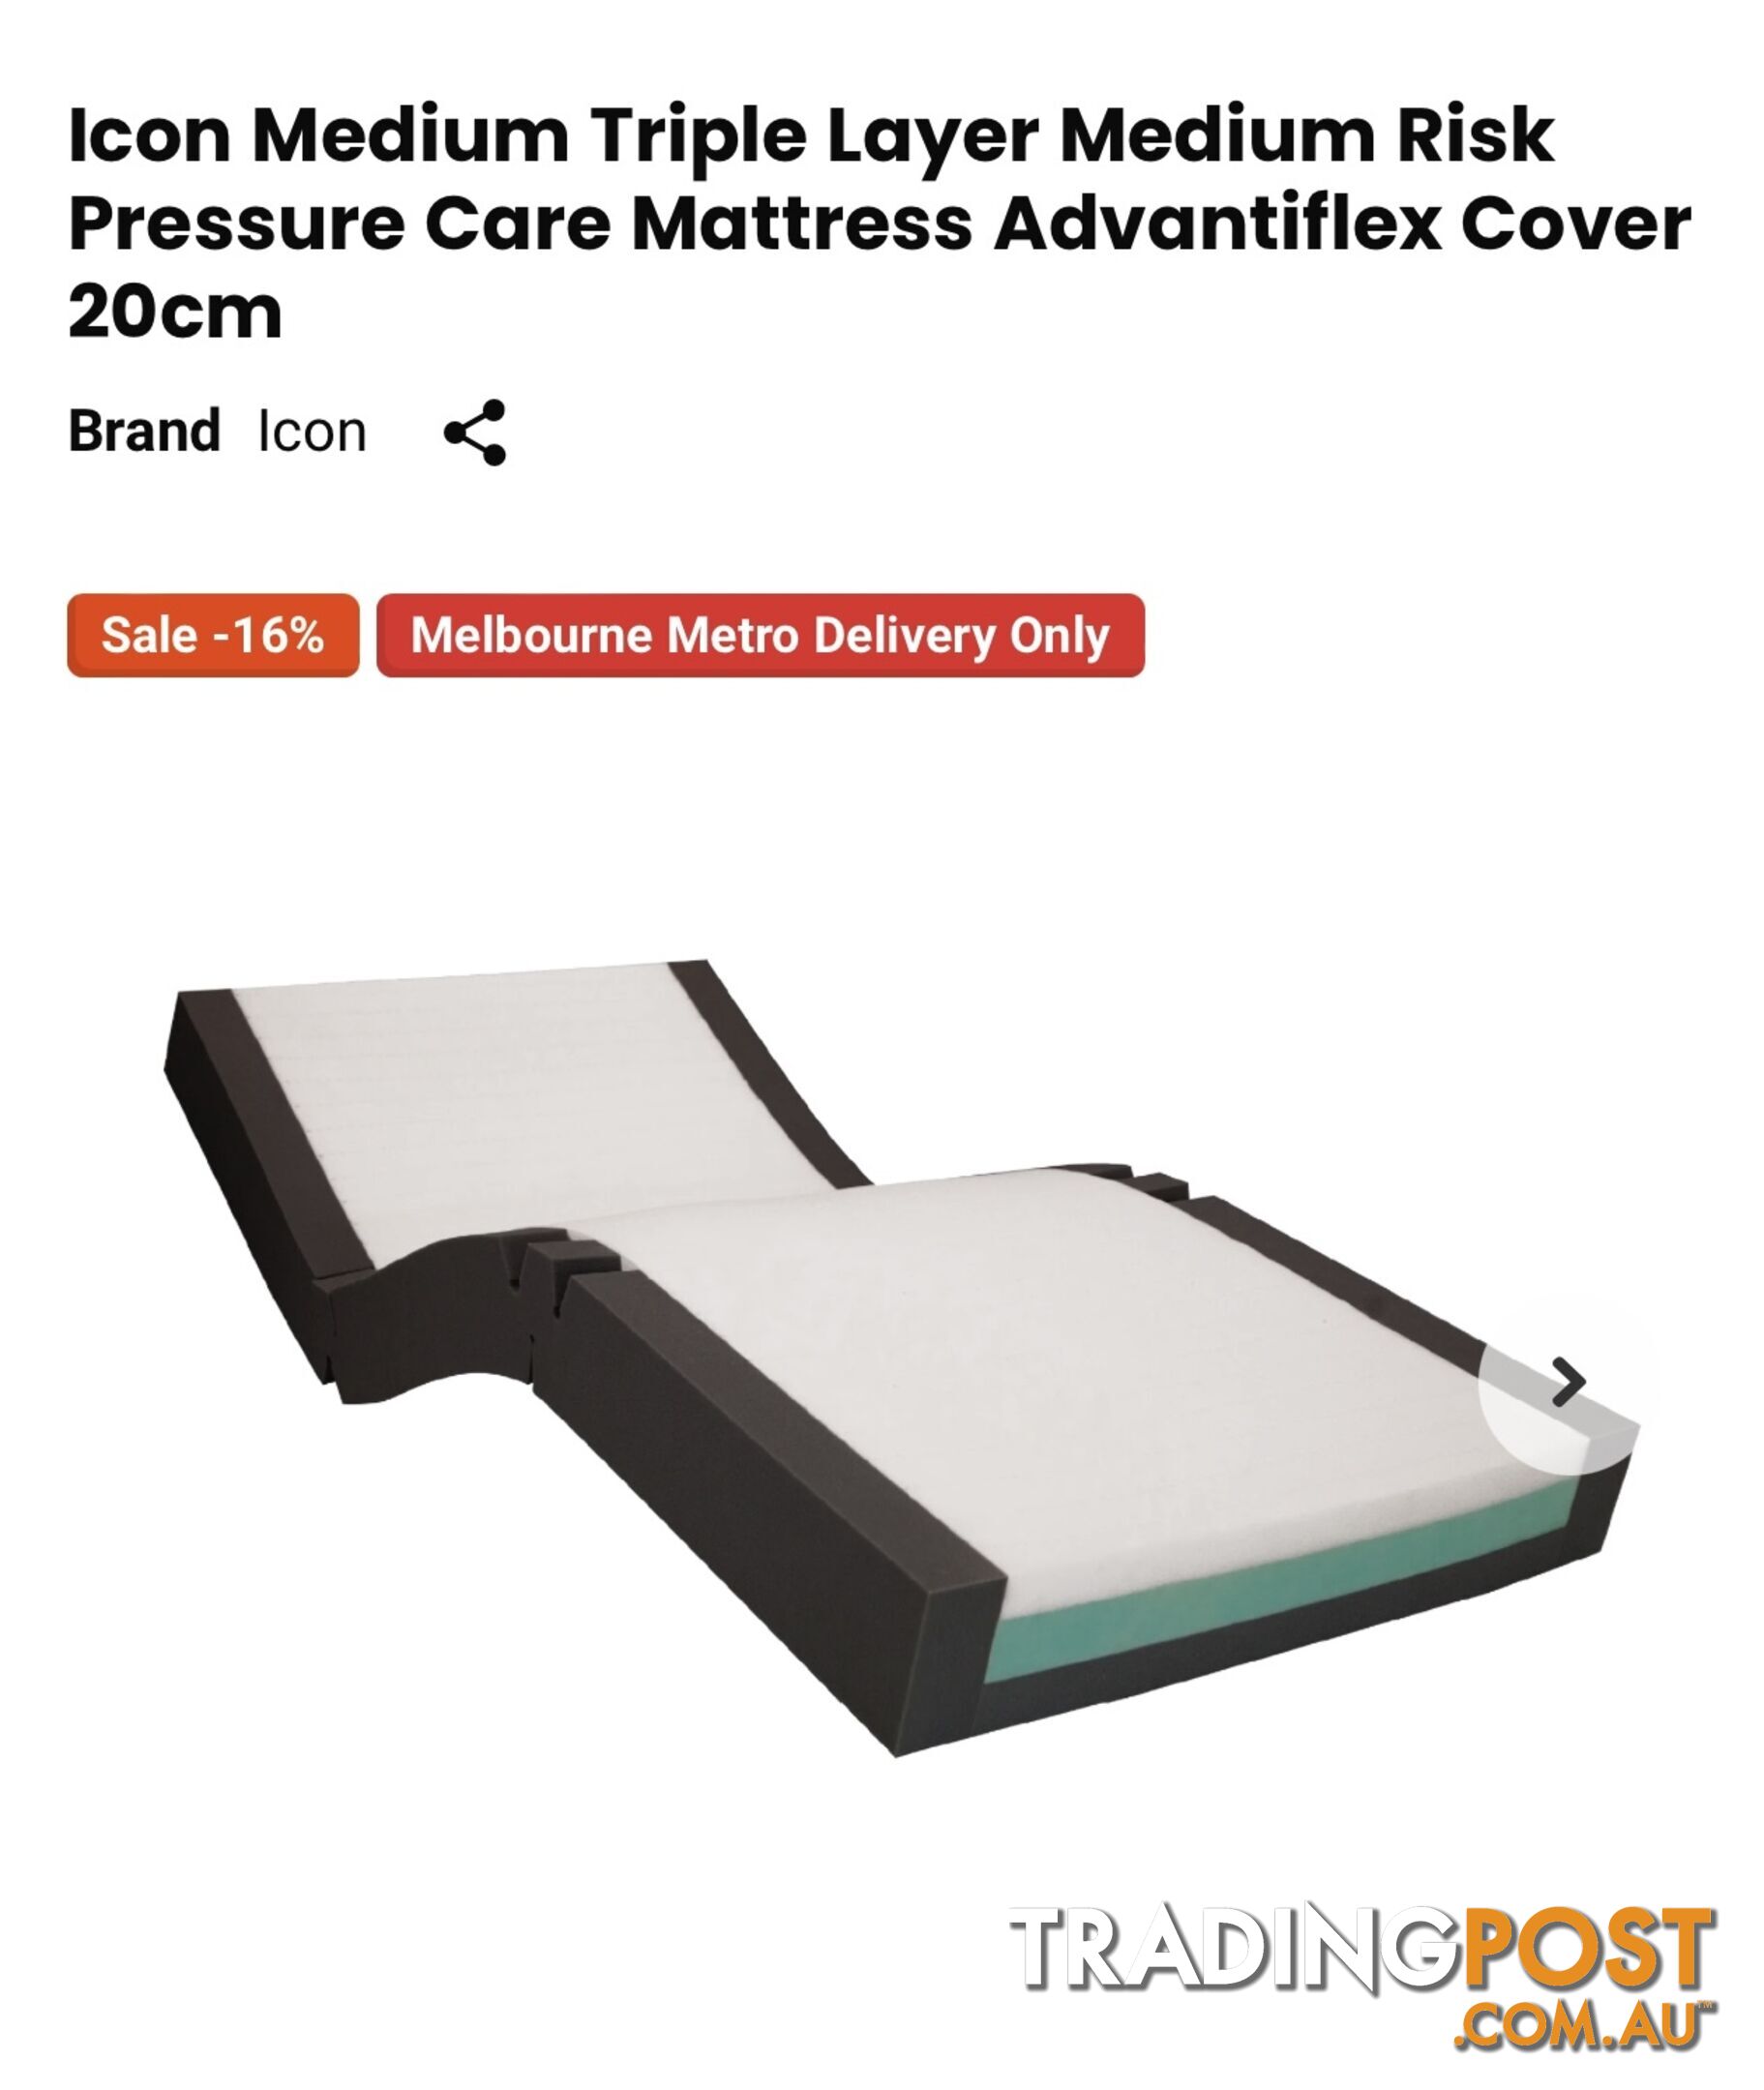 Pressure Care Mattress